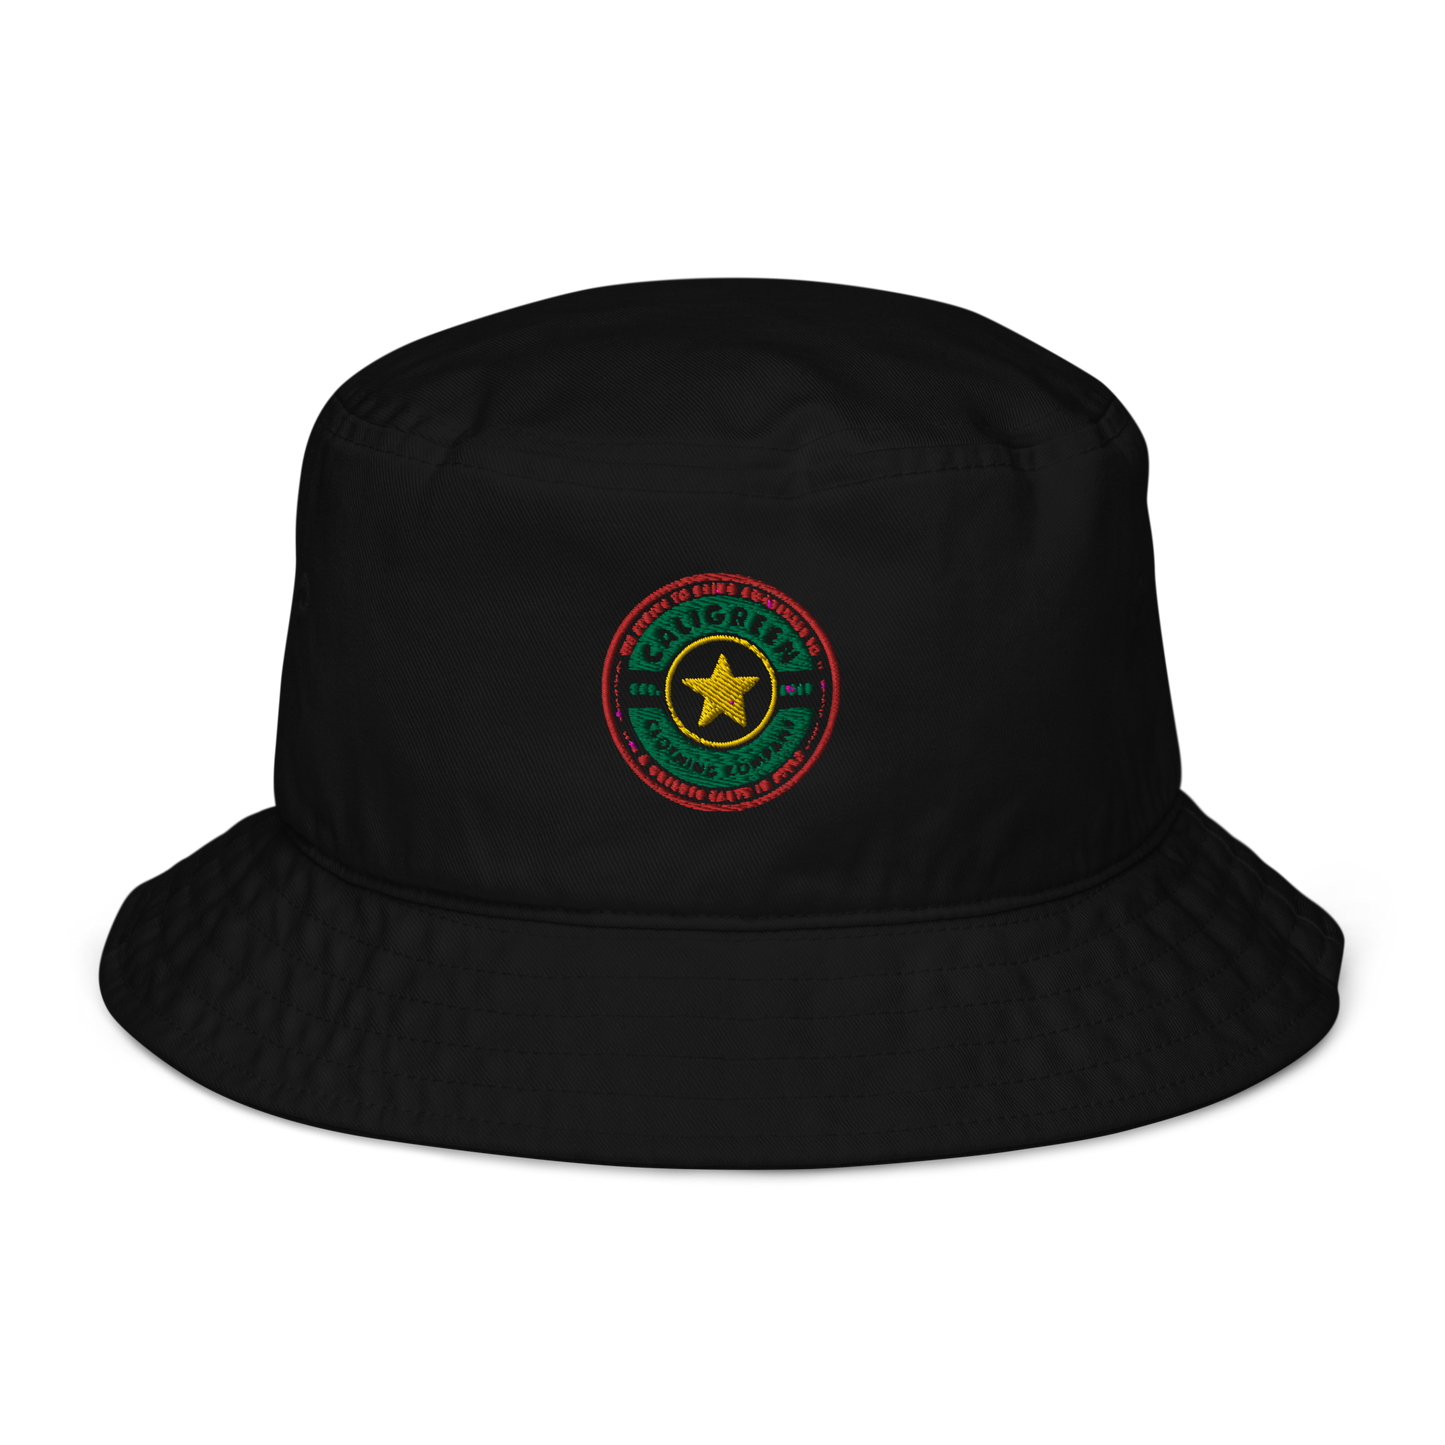 All Star Rasta Organic Bucket Hat